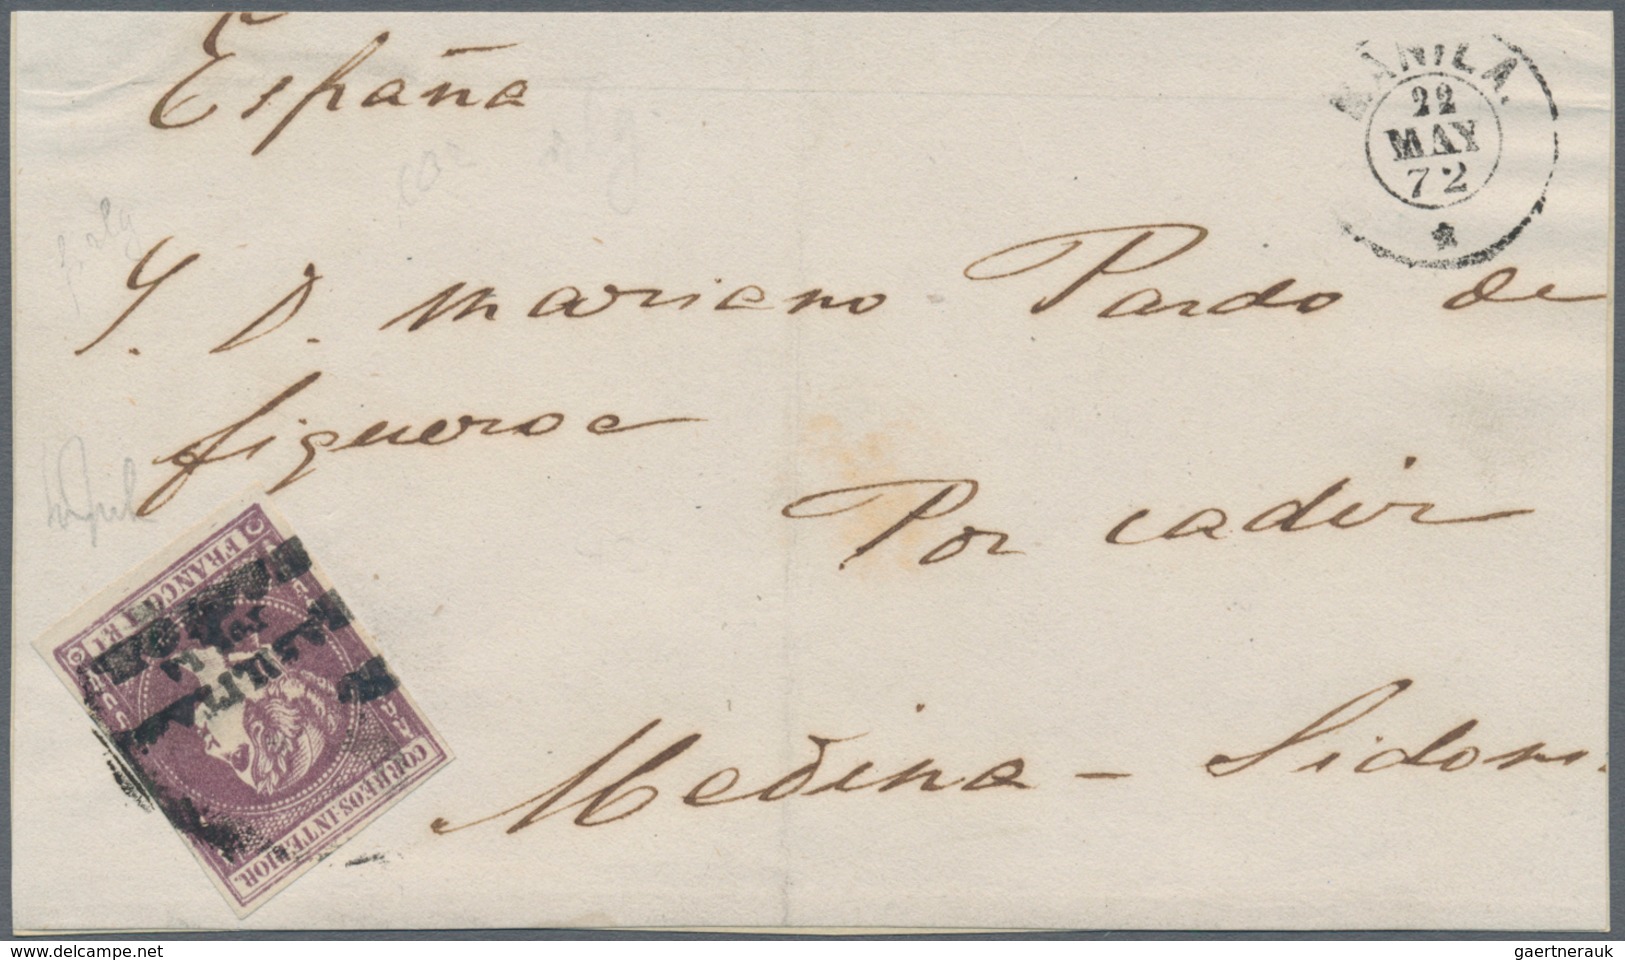 Philippinen: 1861, 1 Real Violet Ovpt. "habilitado / Por La / Naction", On Front Cover To Medina Sid - Philippinen